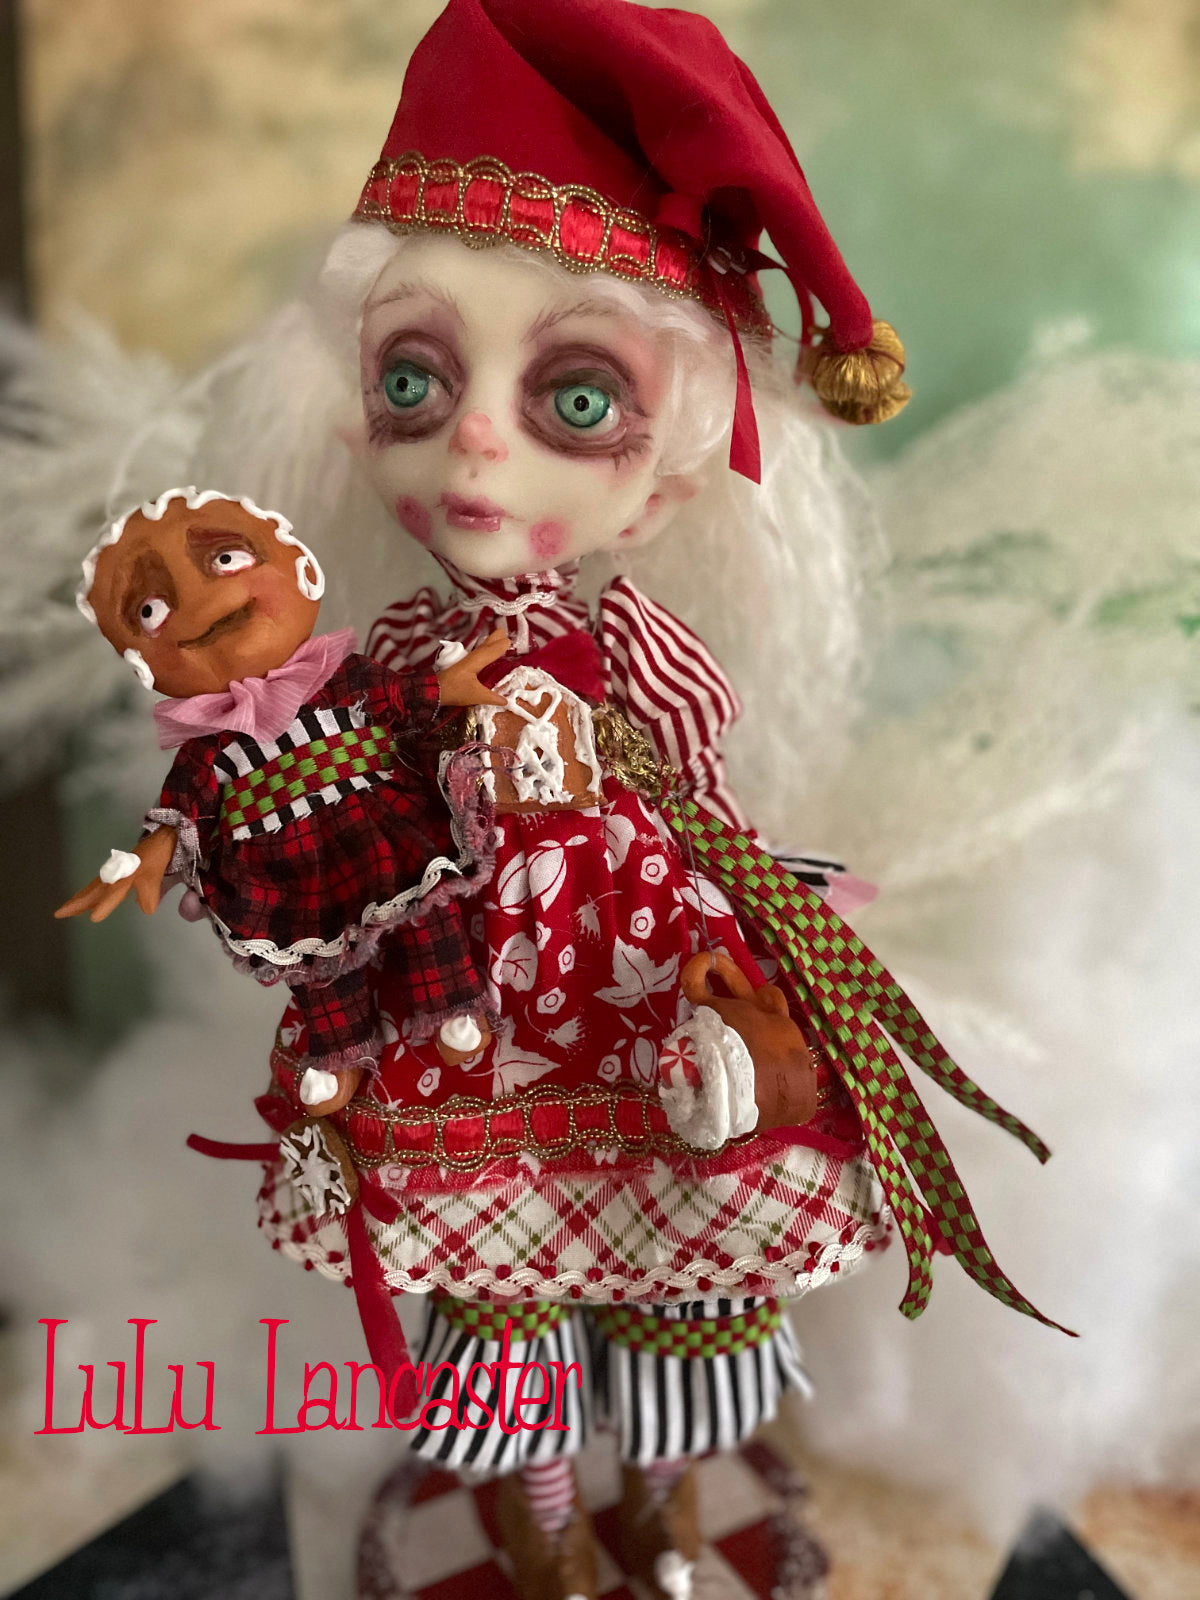 SleepyTime Gingerbread the Christmas Elf LuLu's Holiday Original LuLu Lancaster Art Doll